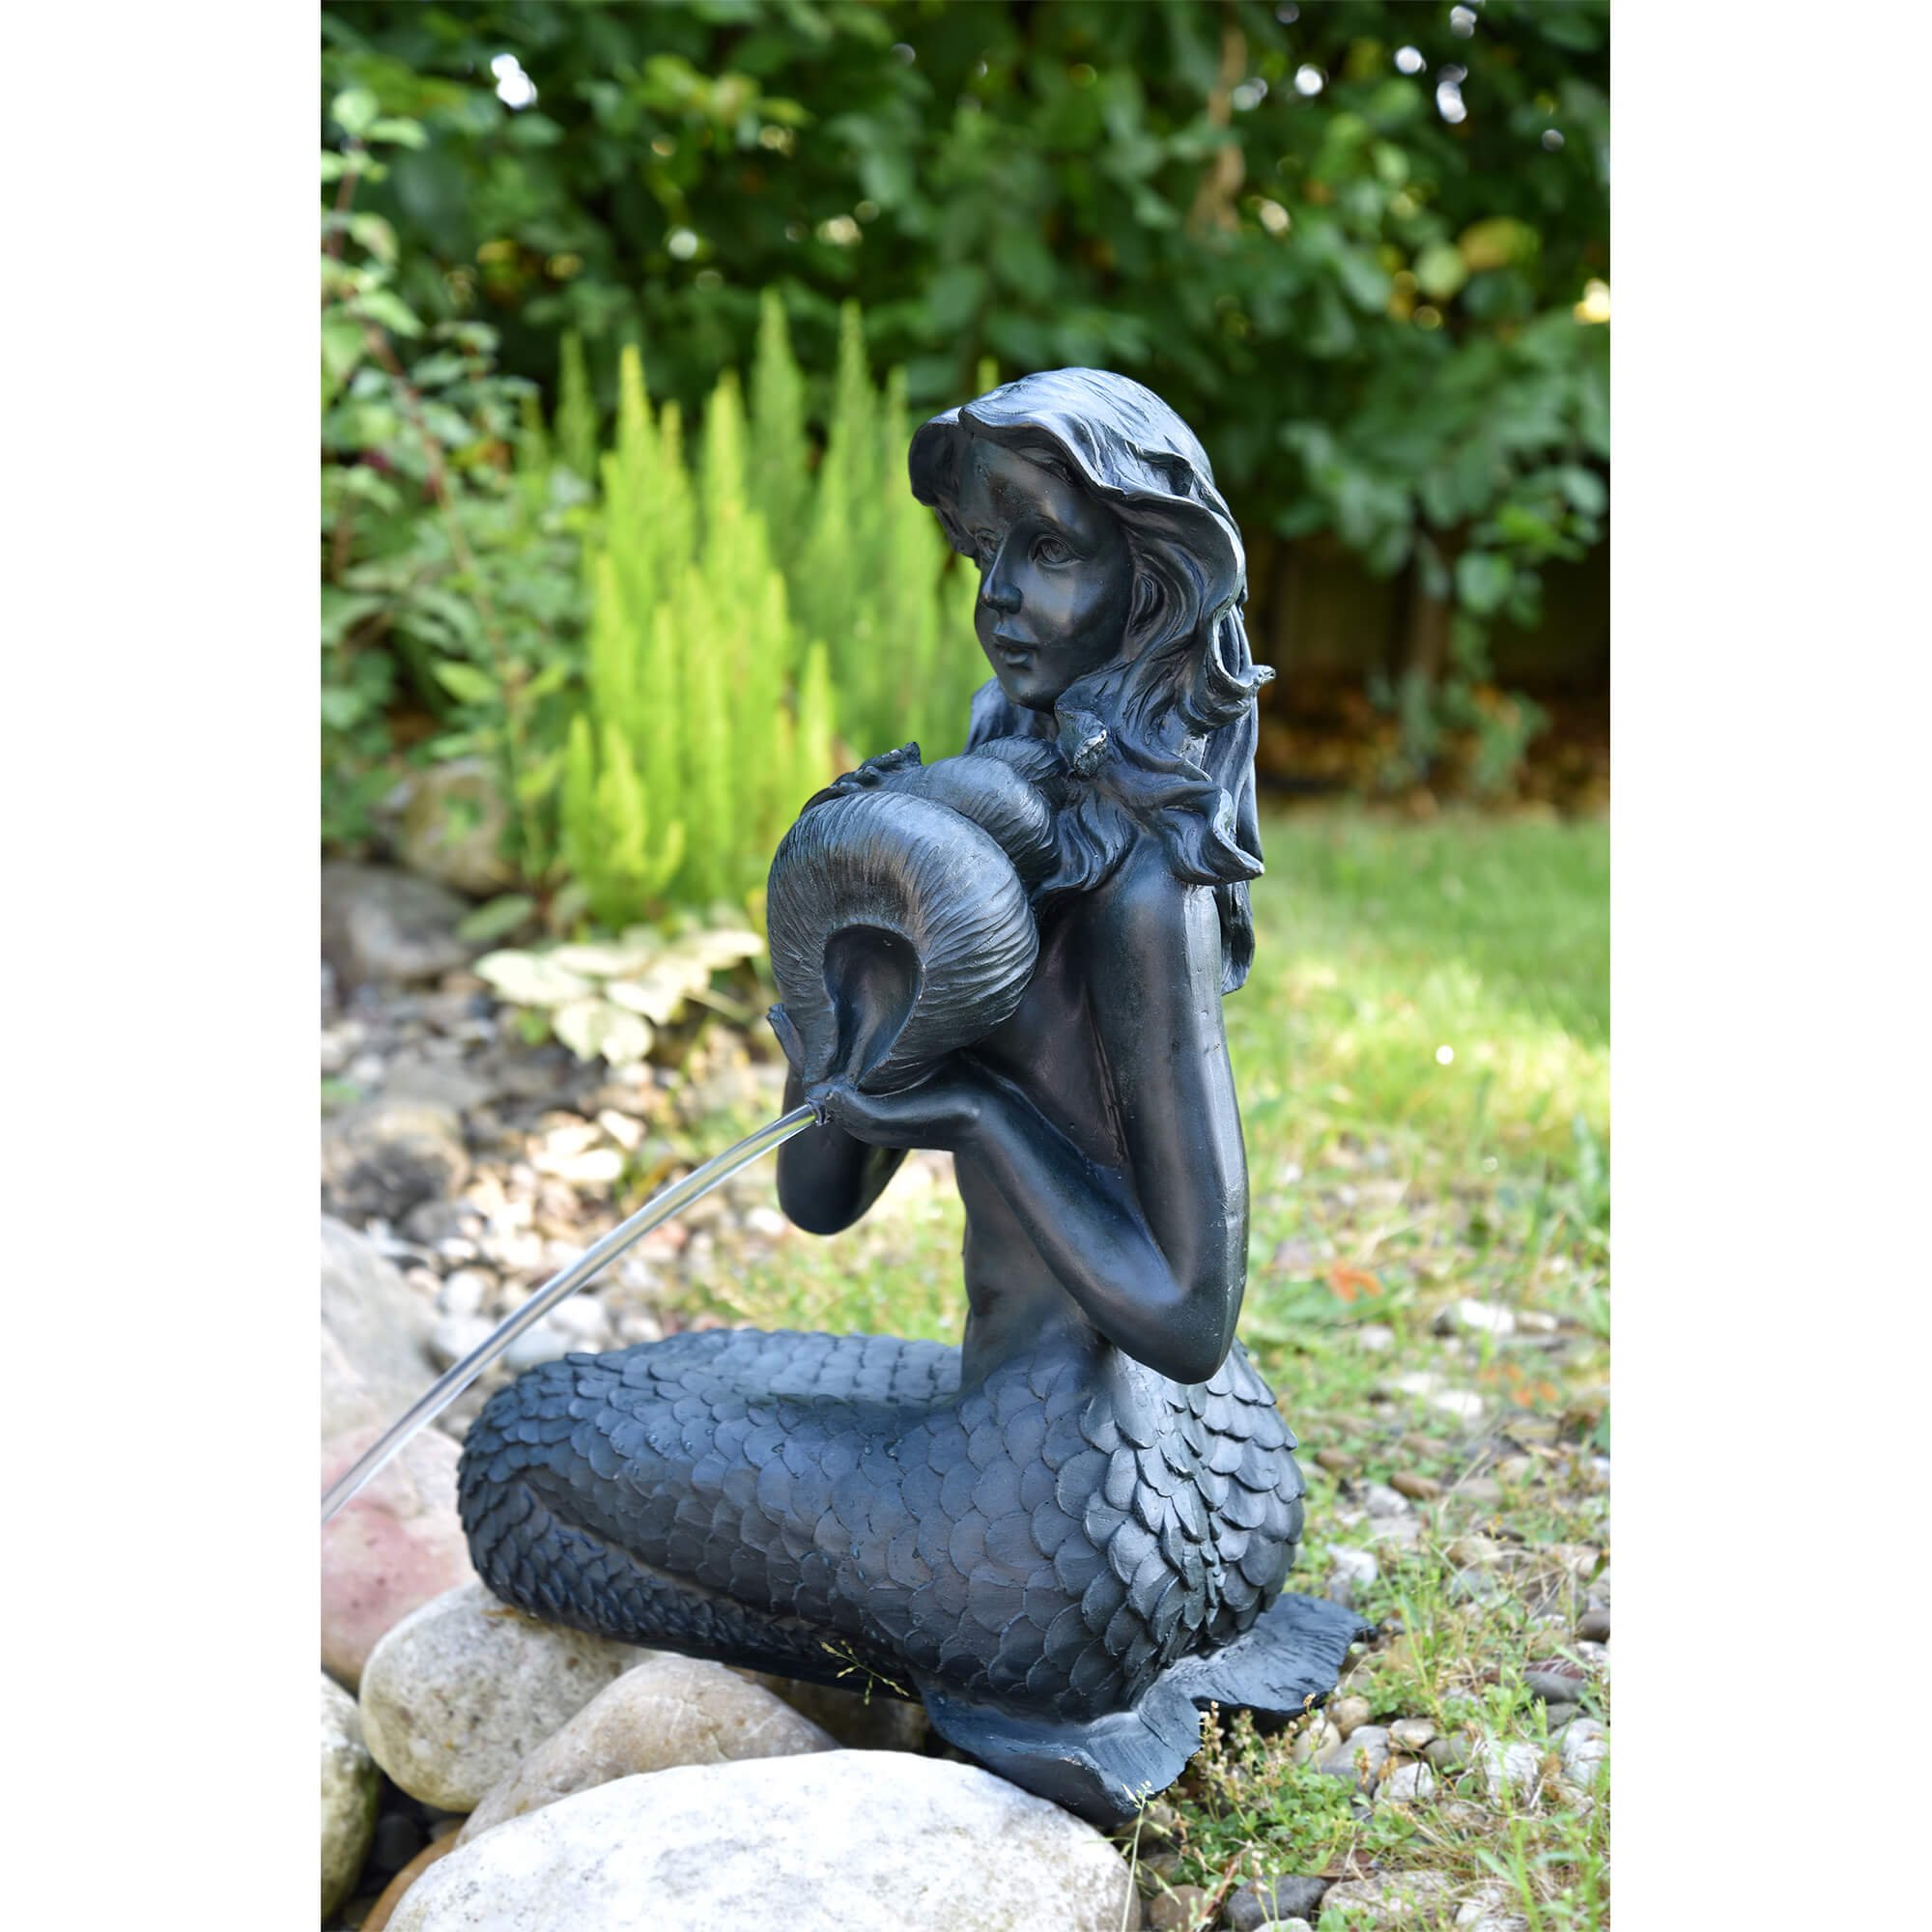 Teichfigur "Meerjungfrau mit Amphore", 39x26x54cm